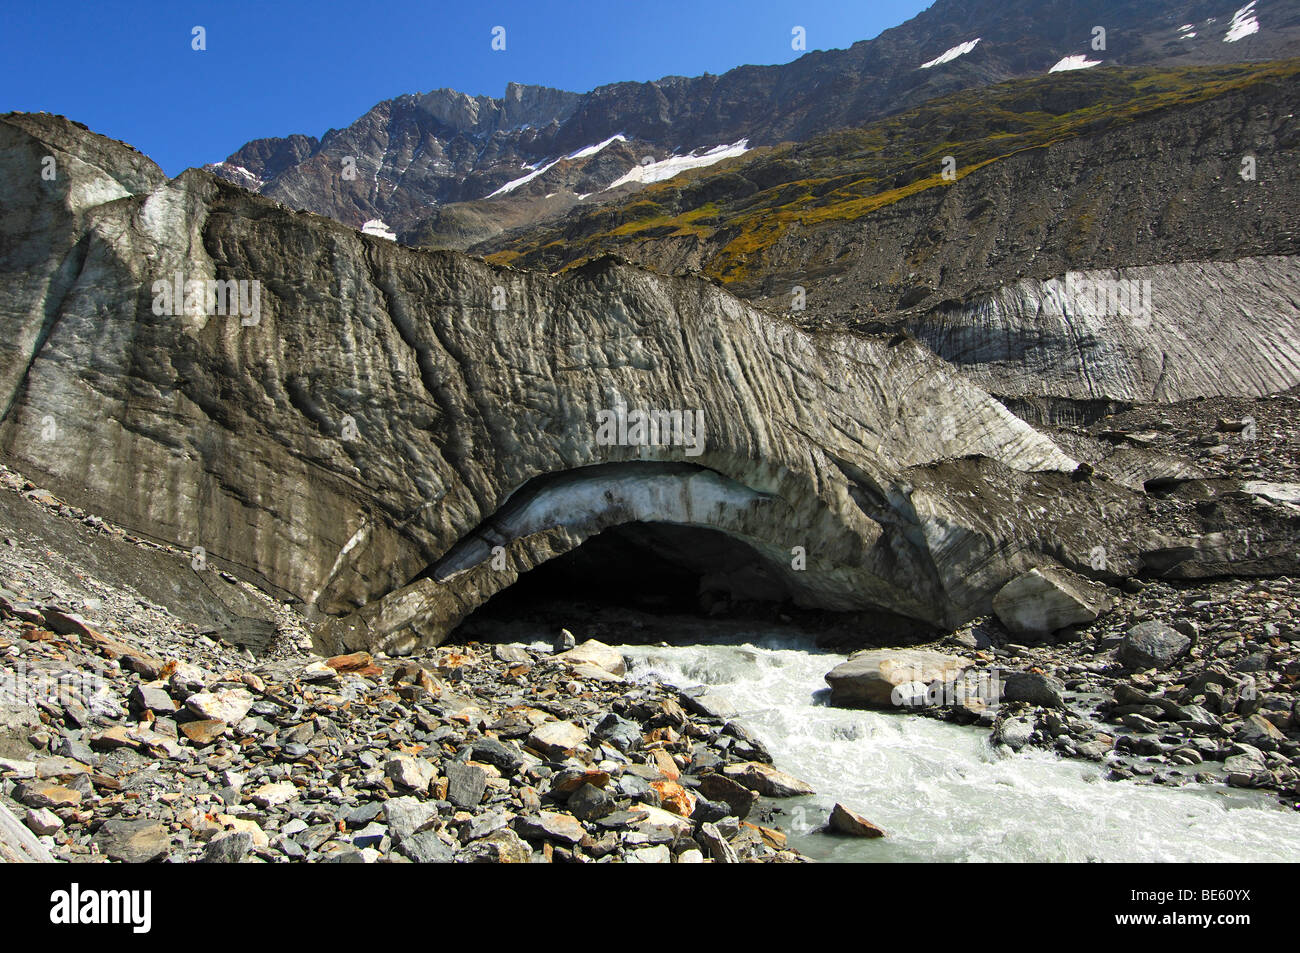 Bocca del ghiacciaio del ghiacciaio Langgletscher, Loetschental, Vallese, Svizzera Foto Stock